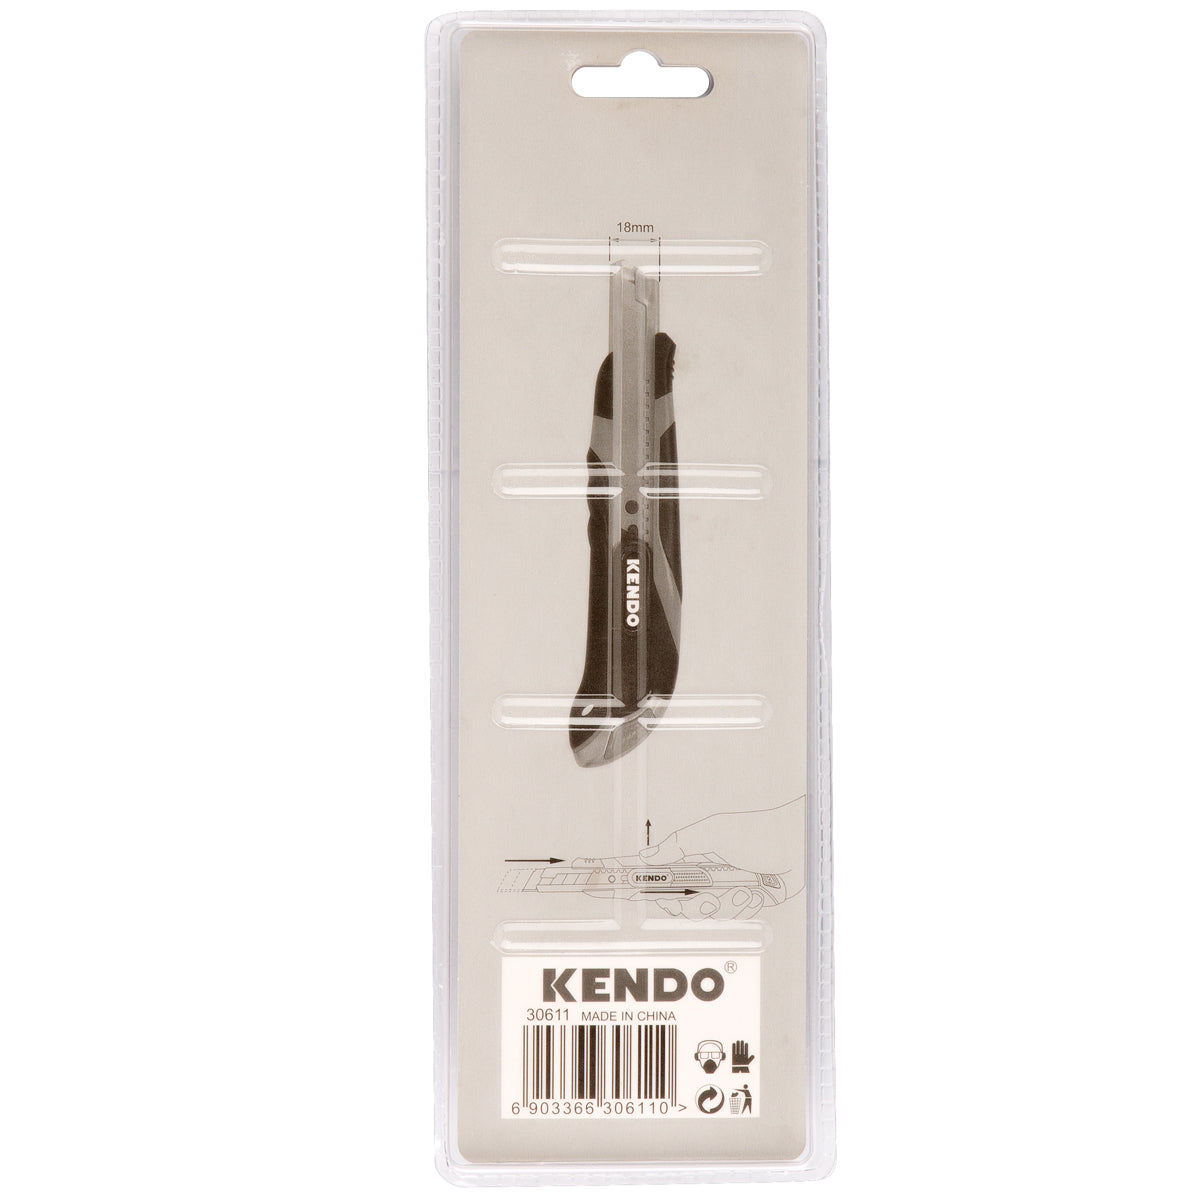 Kendo 18mm Retractable Snap-off Knife